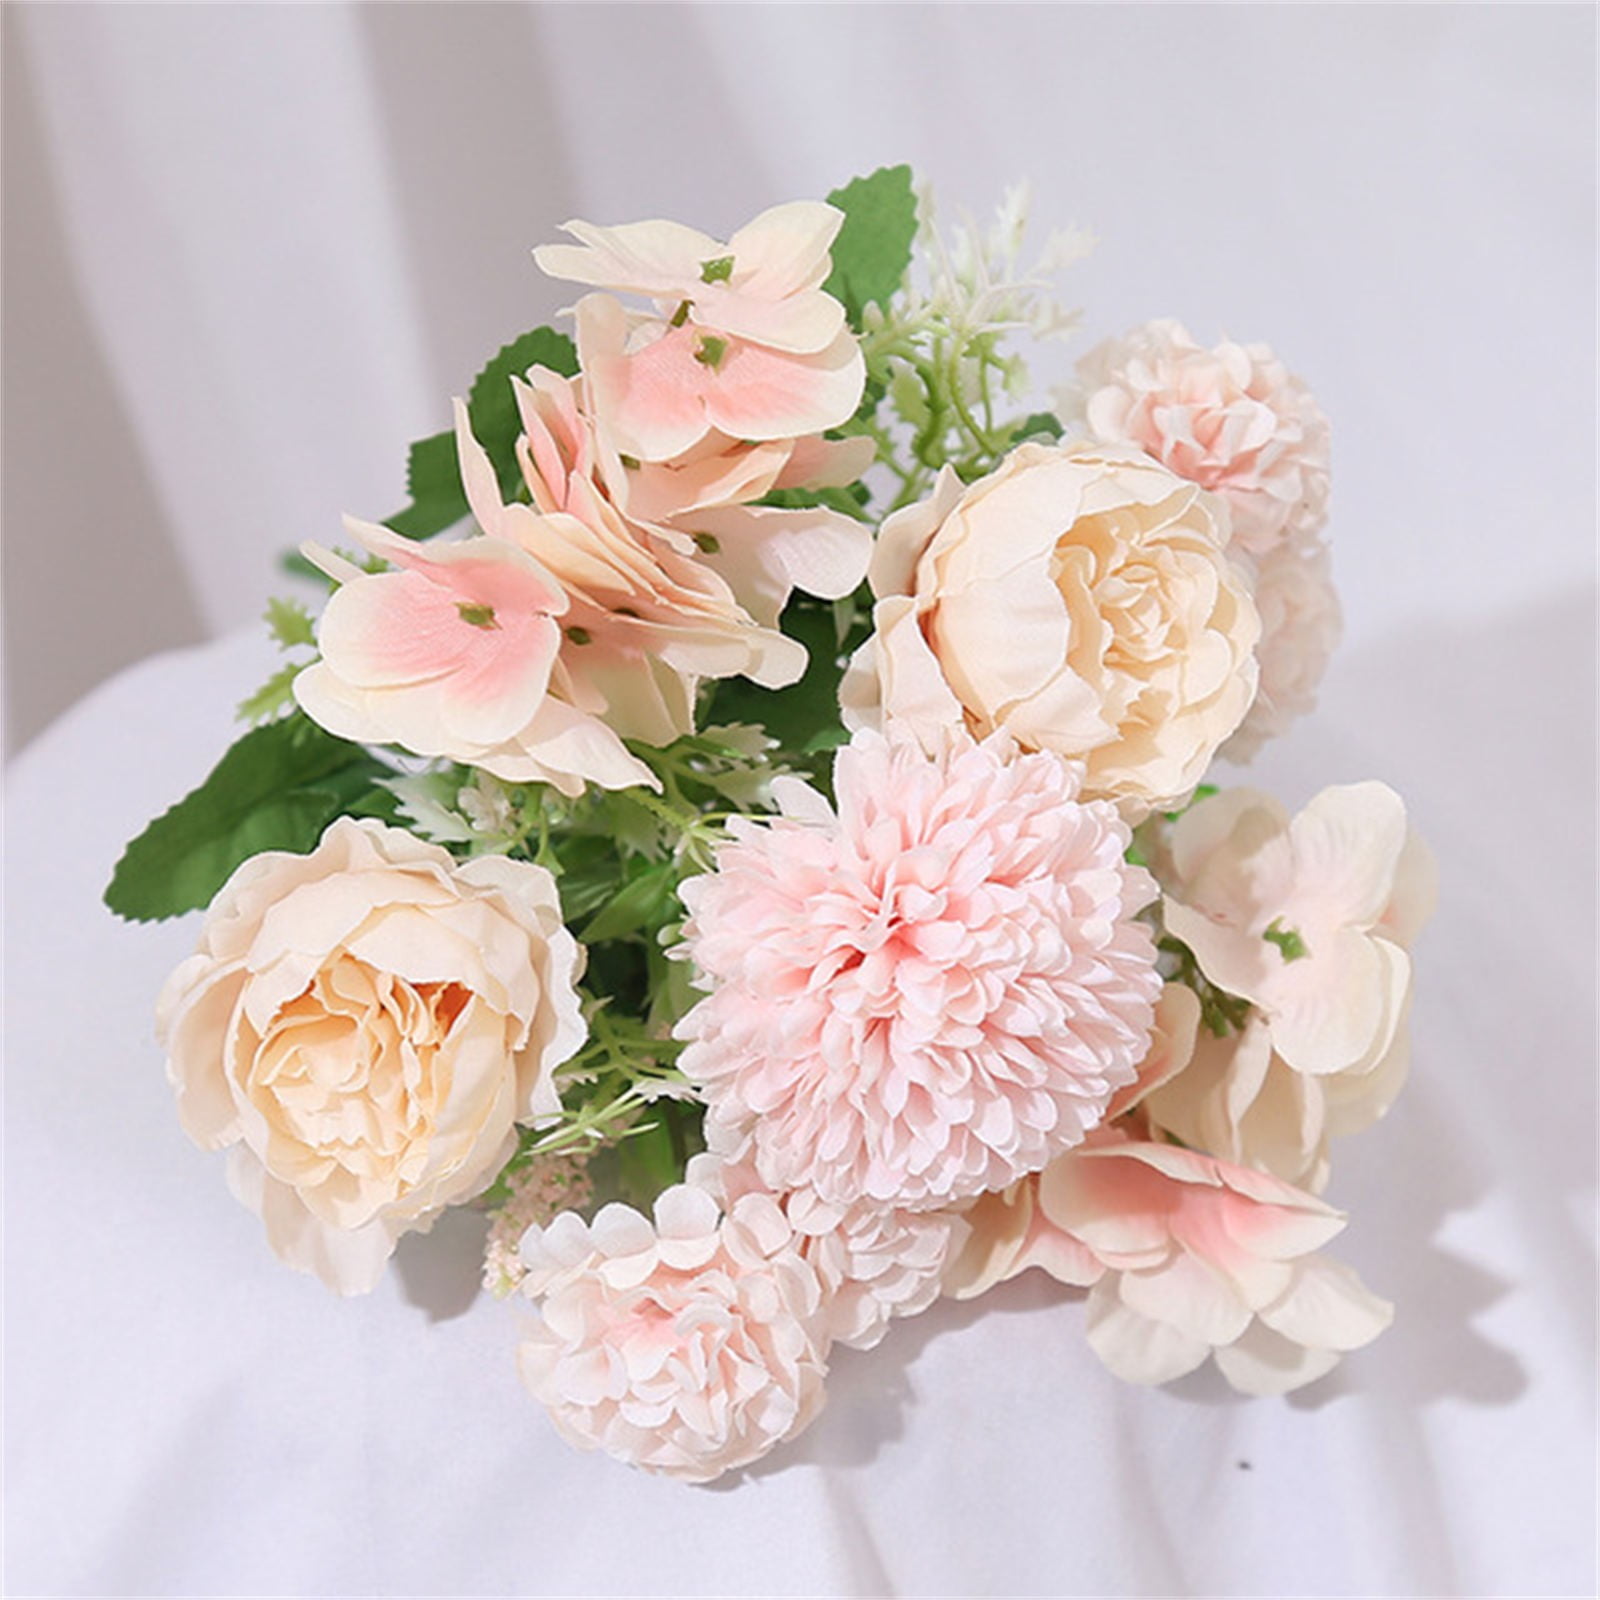 3 peonies silk flowers peony-flower bouquet wedding Artificial flowers 